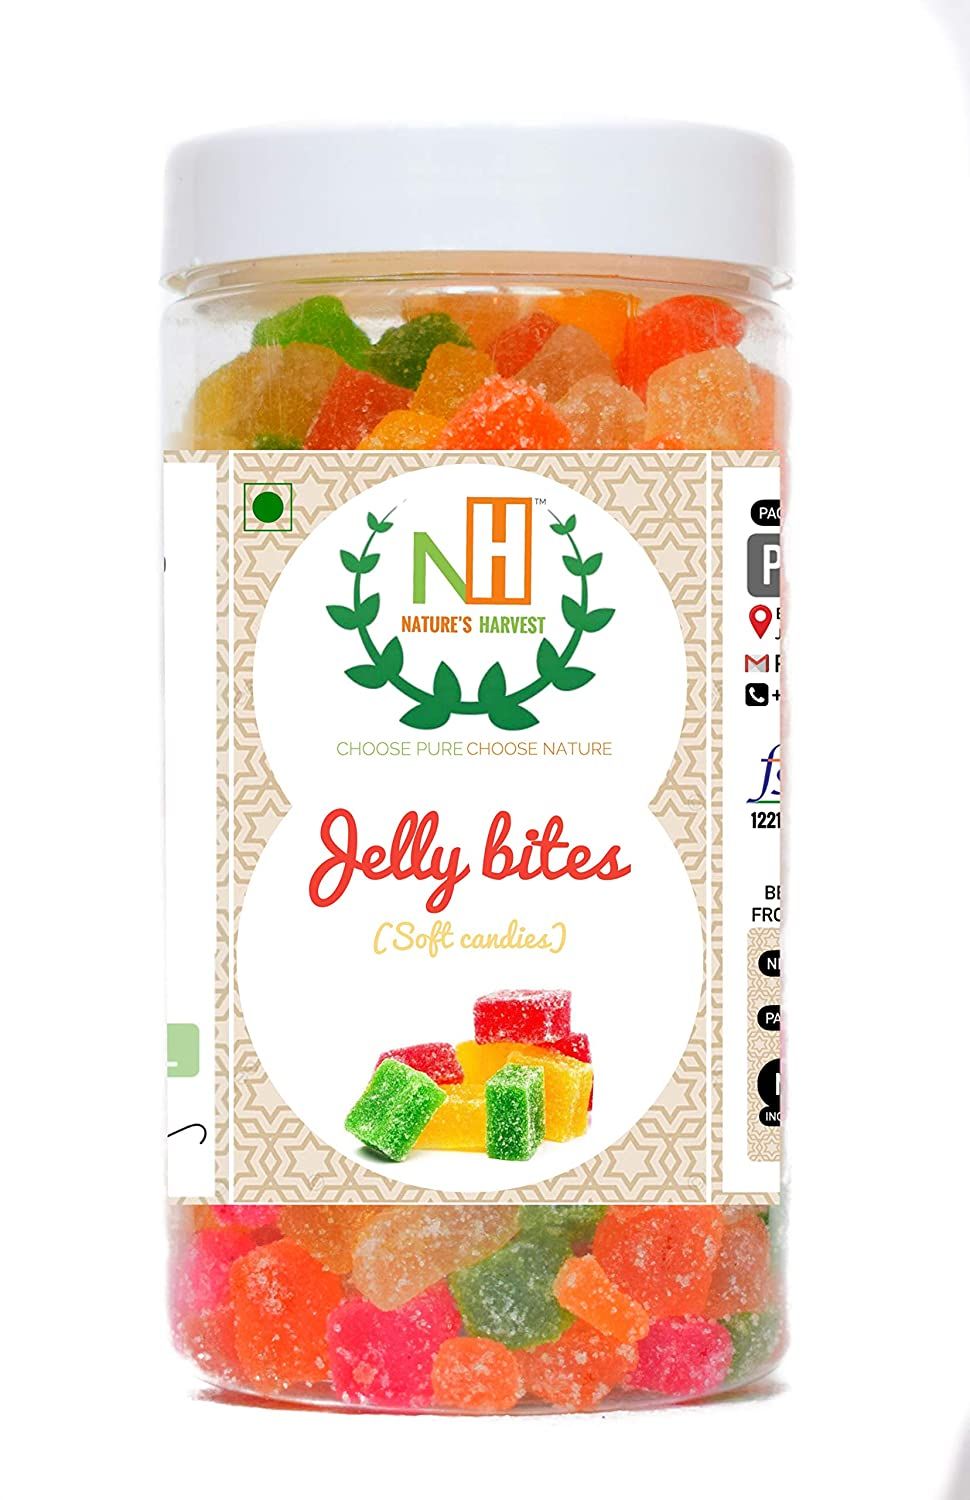 Nature's Harvest Jelly Bites Image